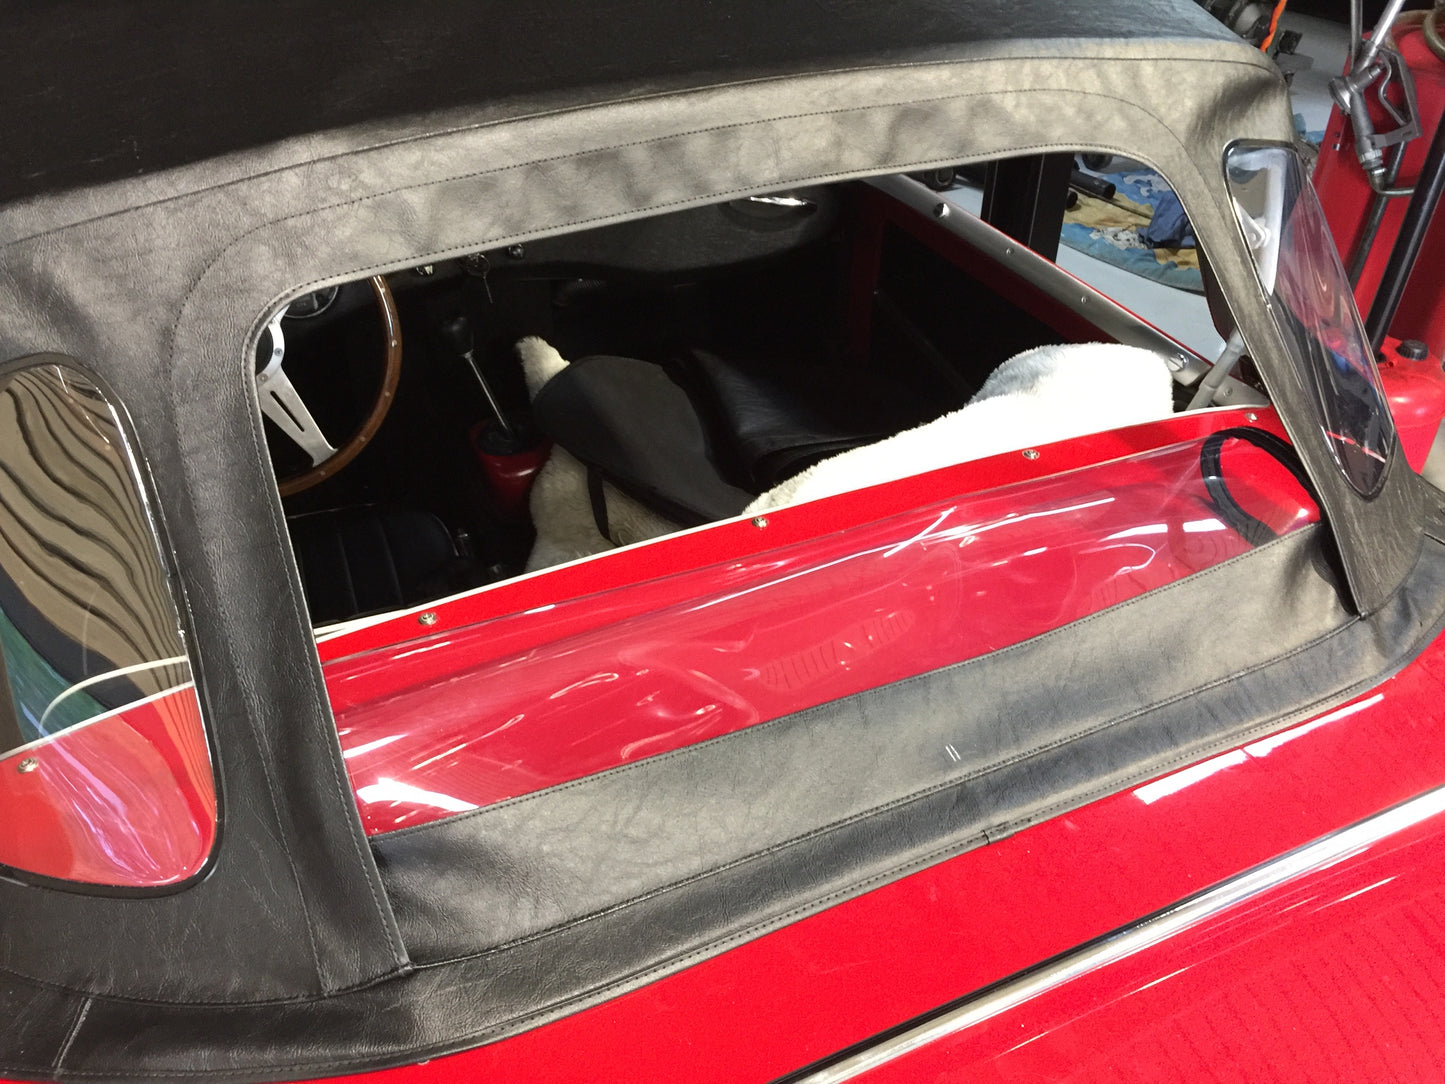 Bugeye Sprite Convertible Top with Zip-Down Window. The convertible convertible top!